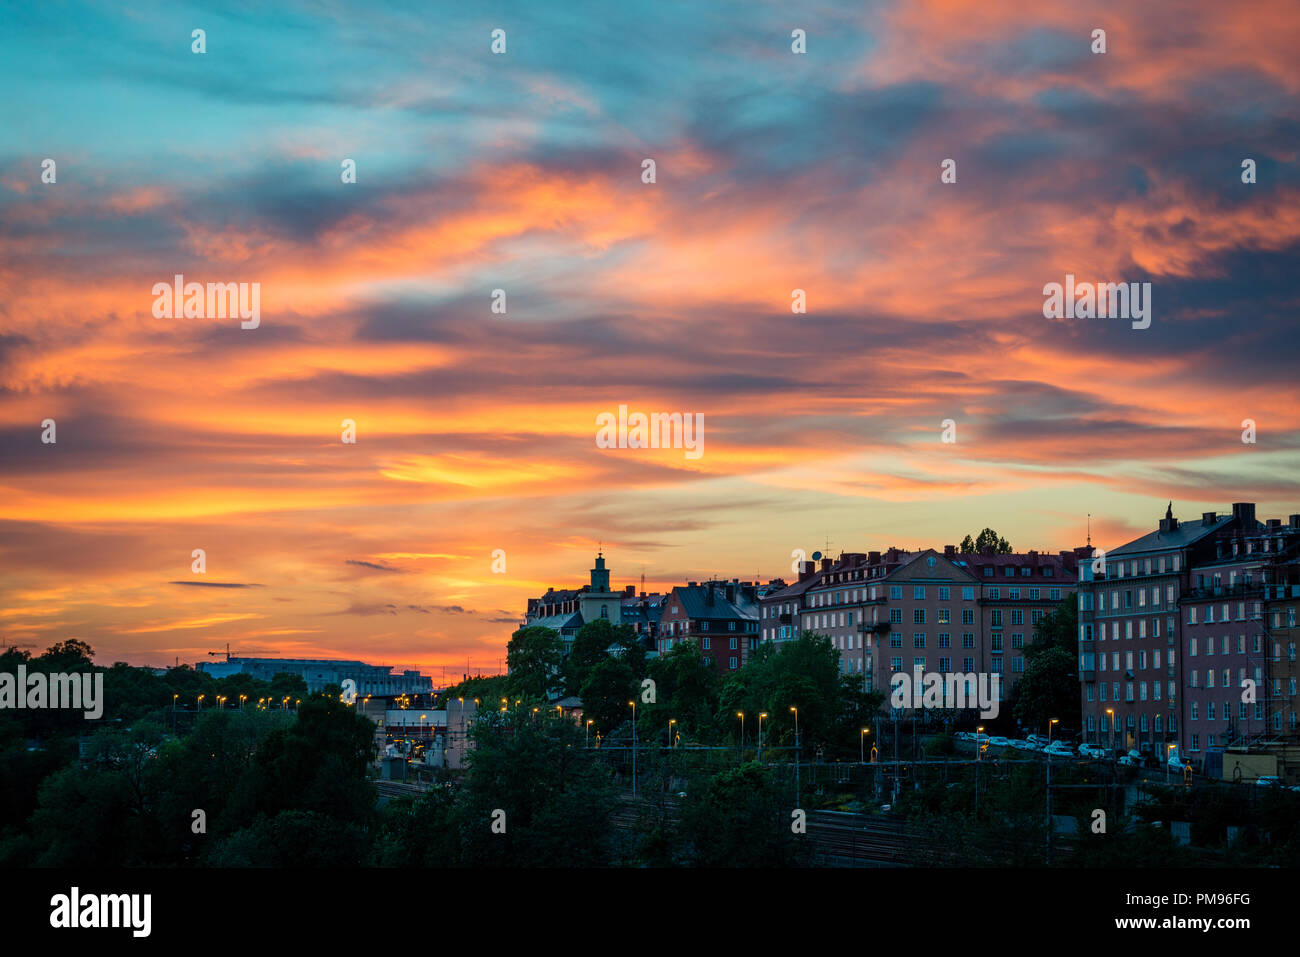 Sunset over vasastaden a Stoccolma Foto Stock